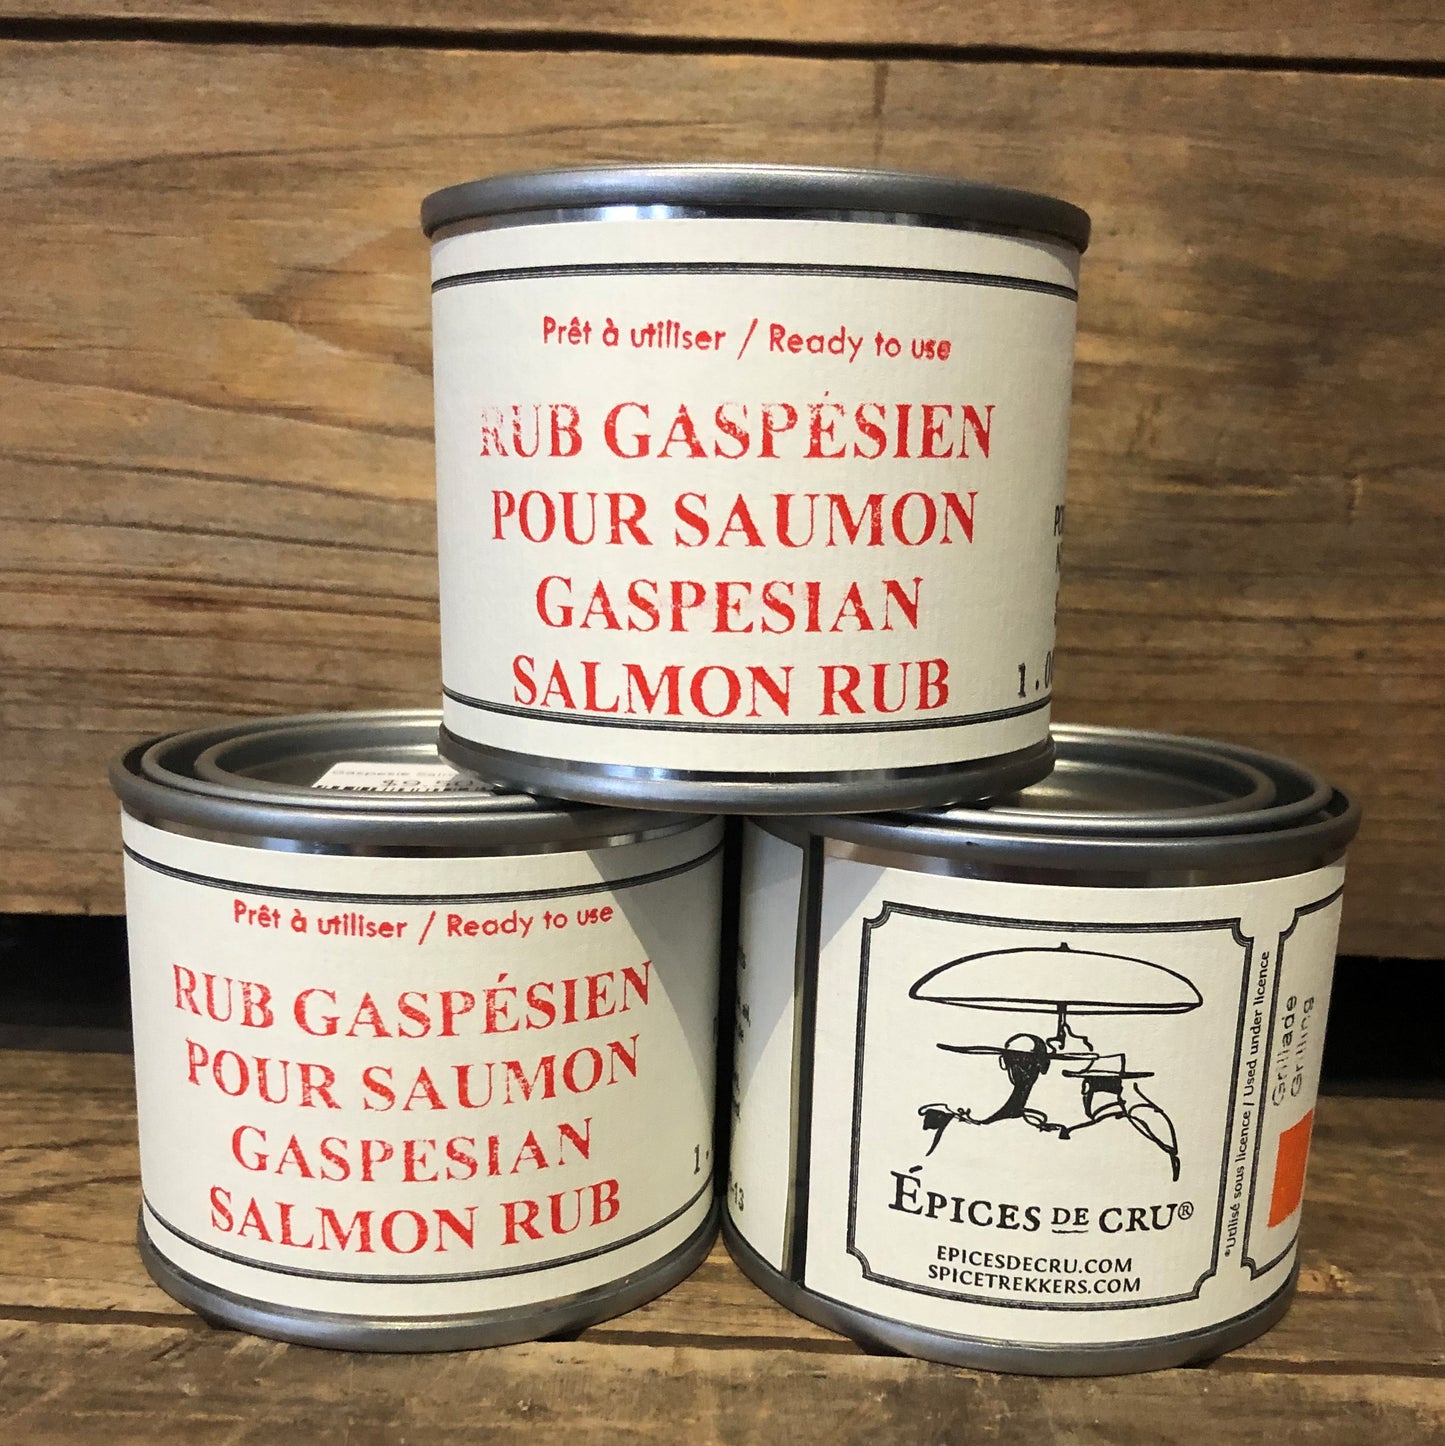 Gaspesian Salmon Rub